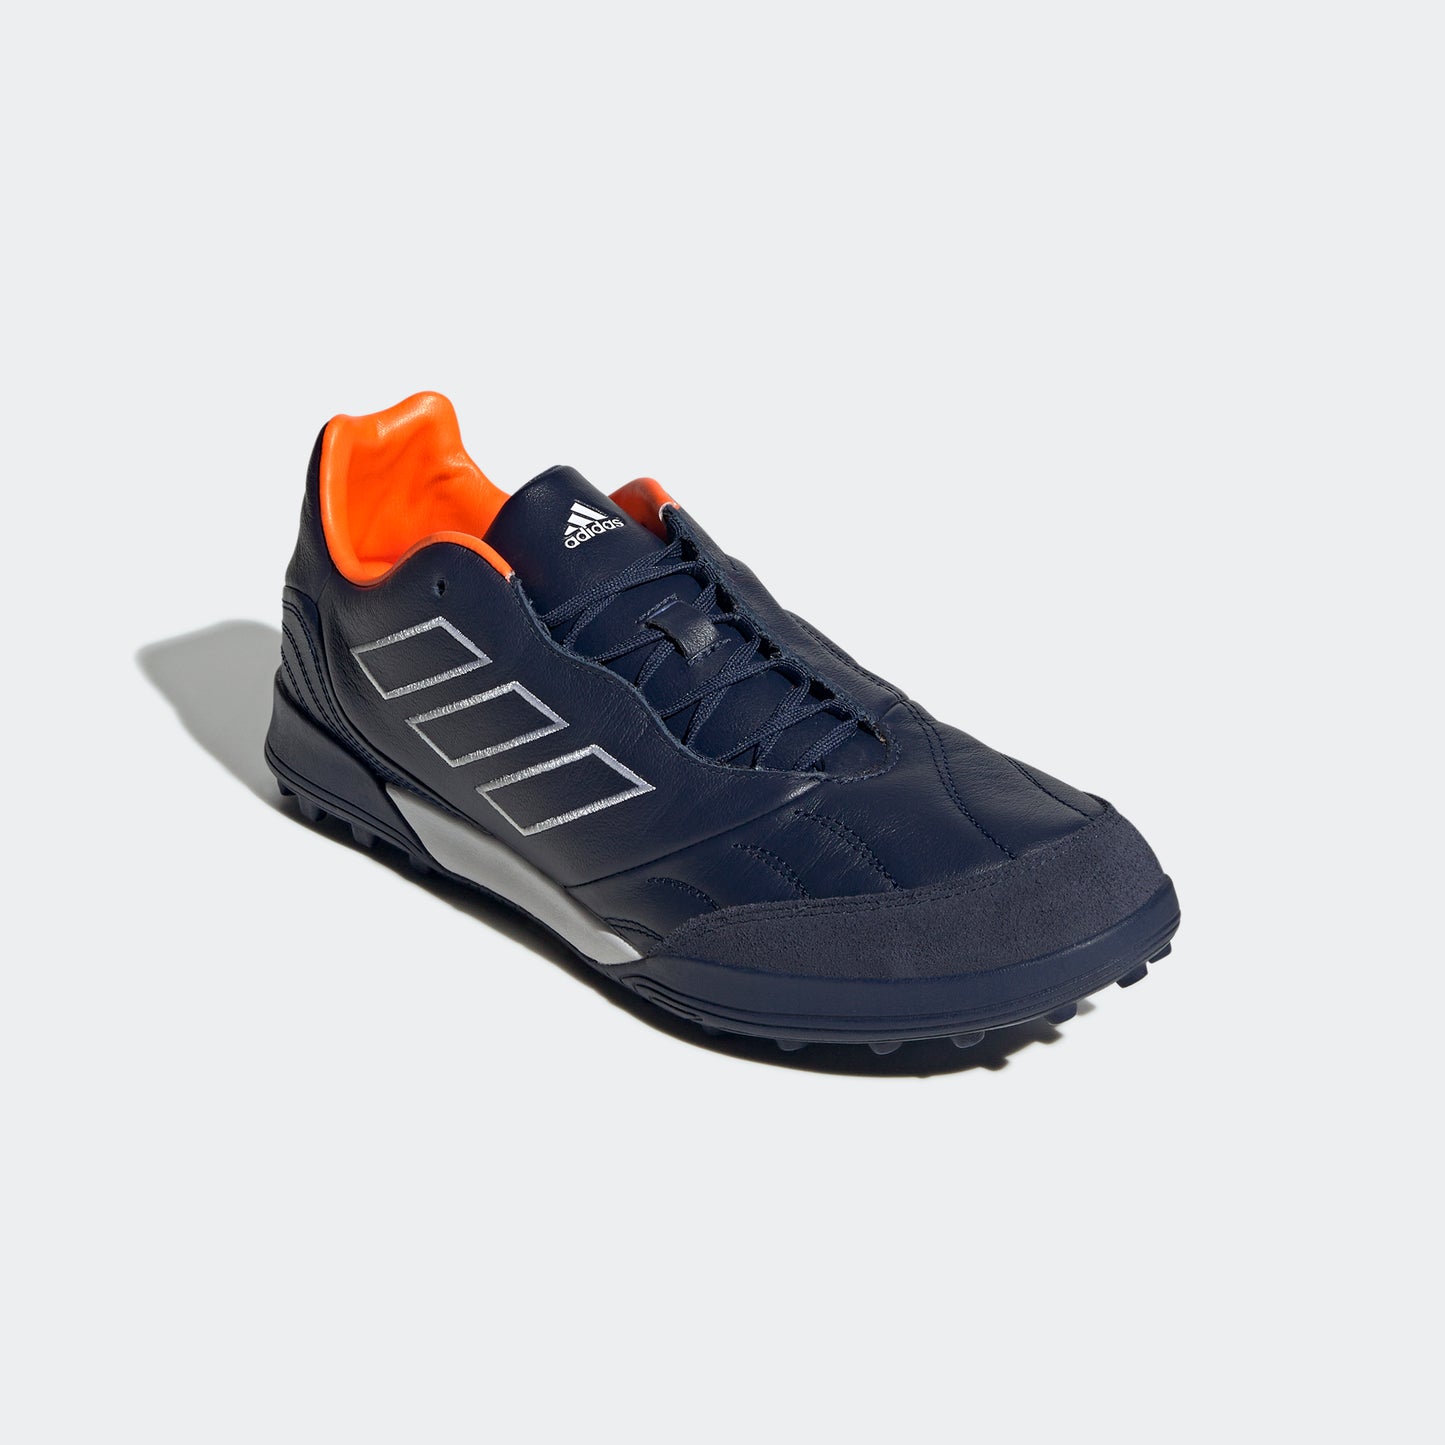 adidas COPA KAPITAN.2 Artificial Turf Soccer Shoes | Team Navy Blue | Men's